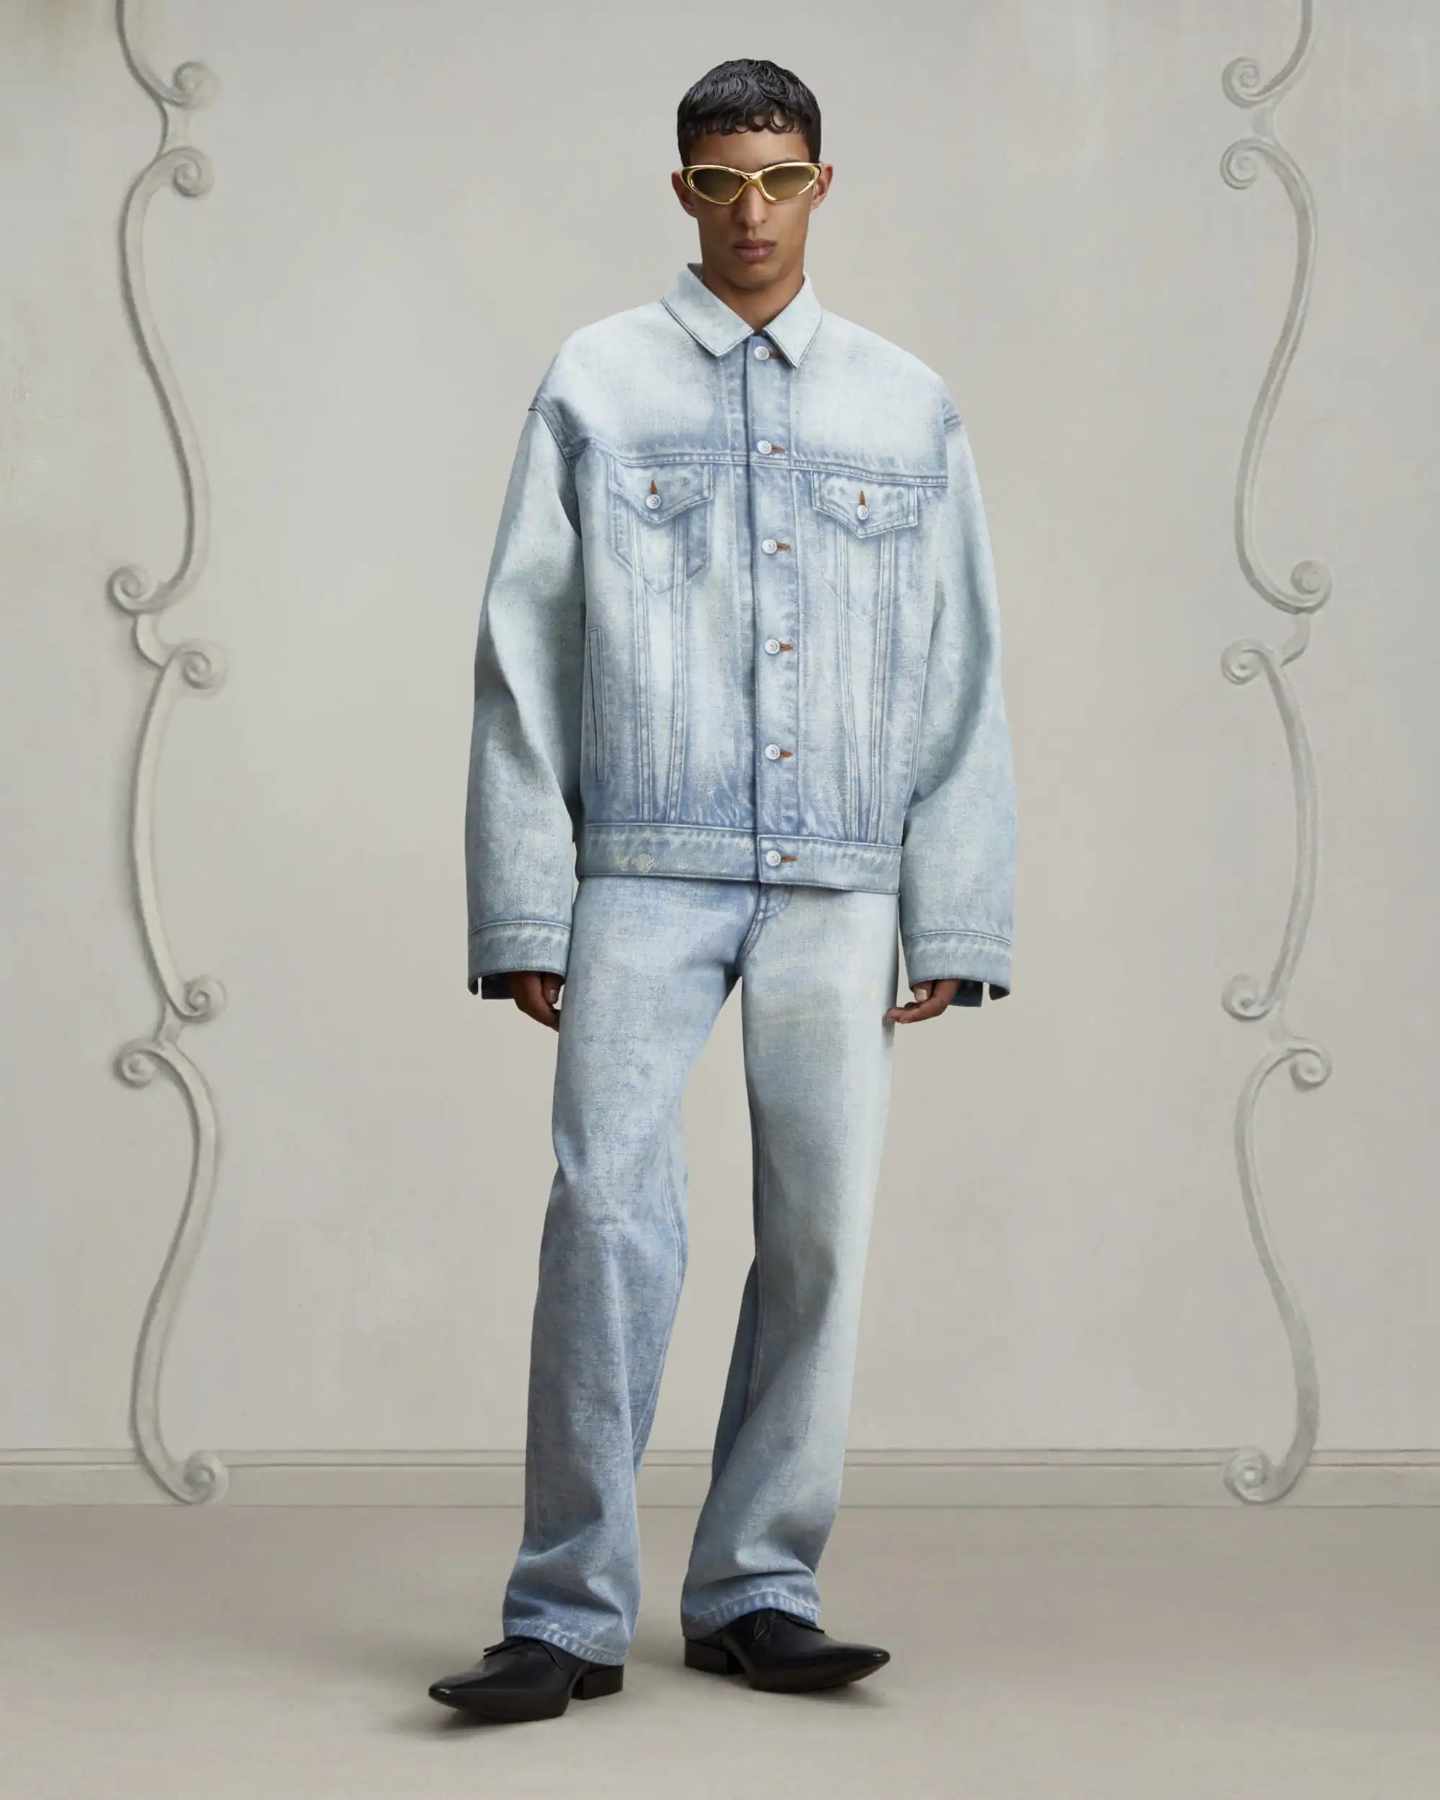 Couture for Cowboys: Meet Balenciaga's $27,000 Blue Jeans